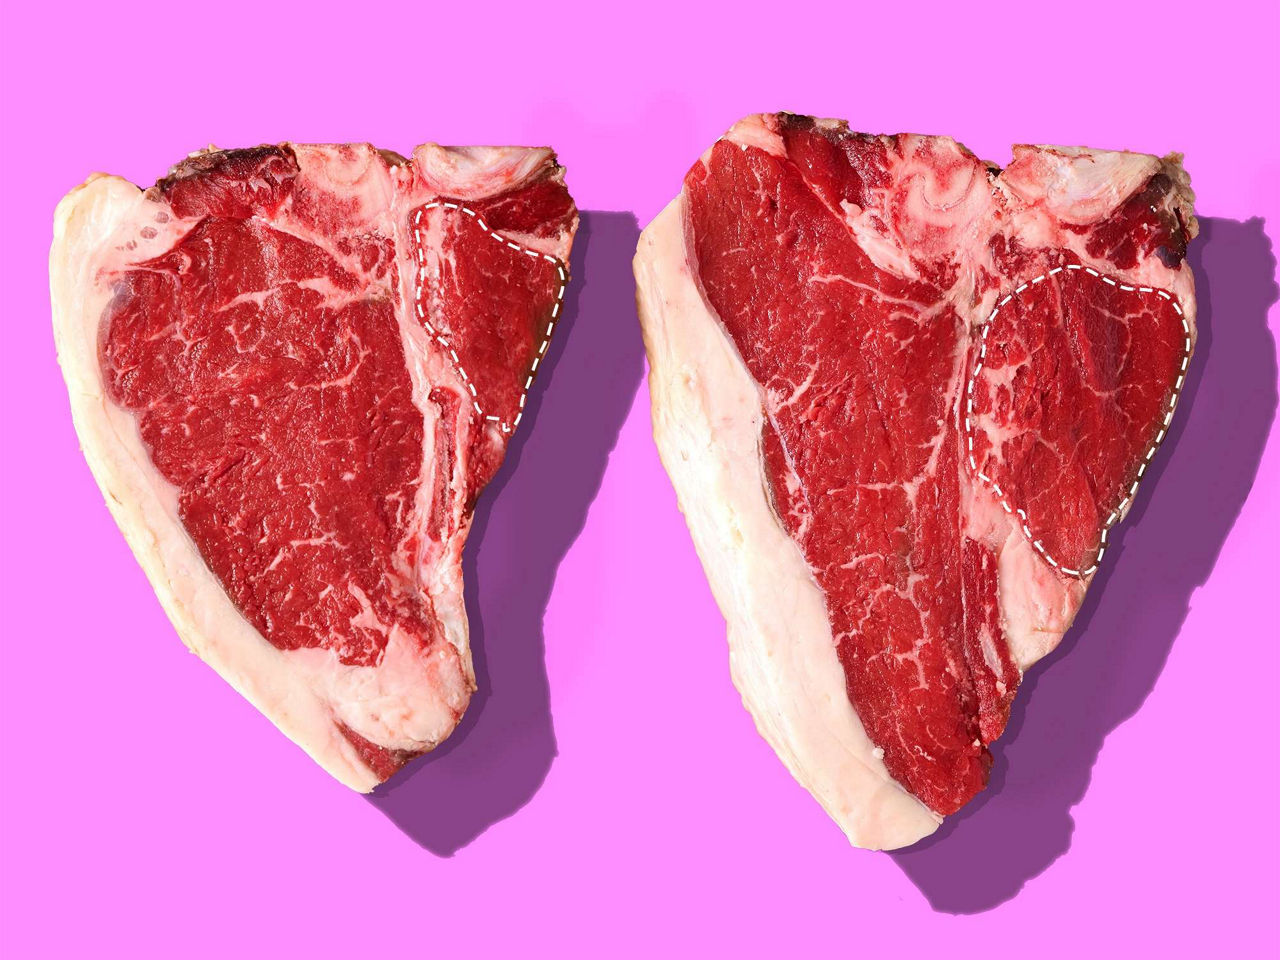 Porterhouse vs T-Bone Steaks: What’s the Difference?